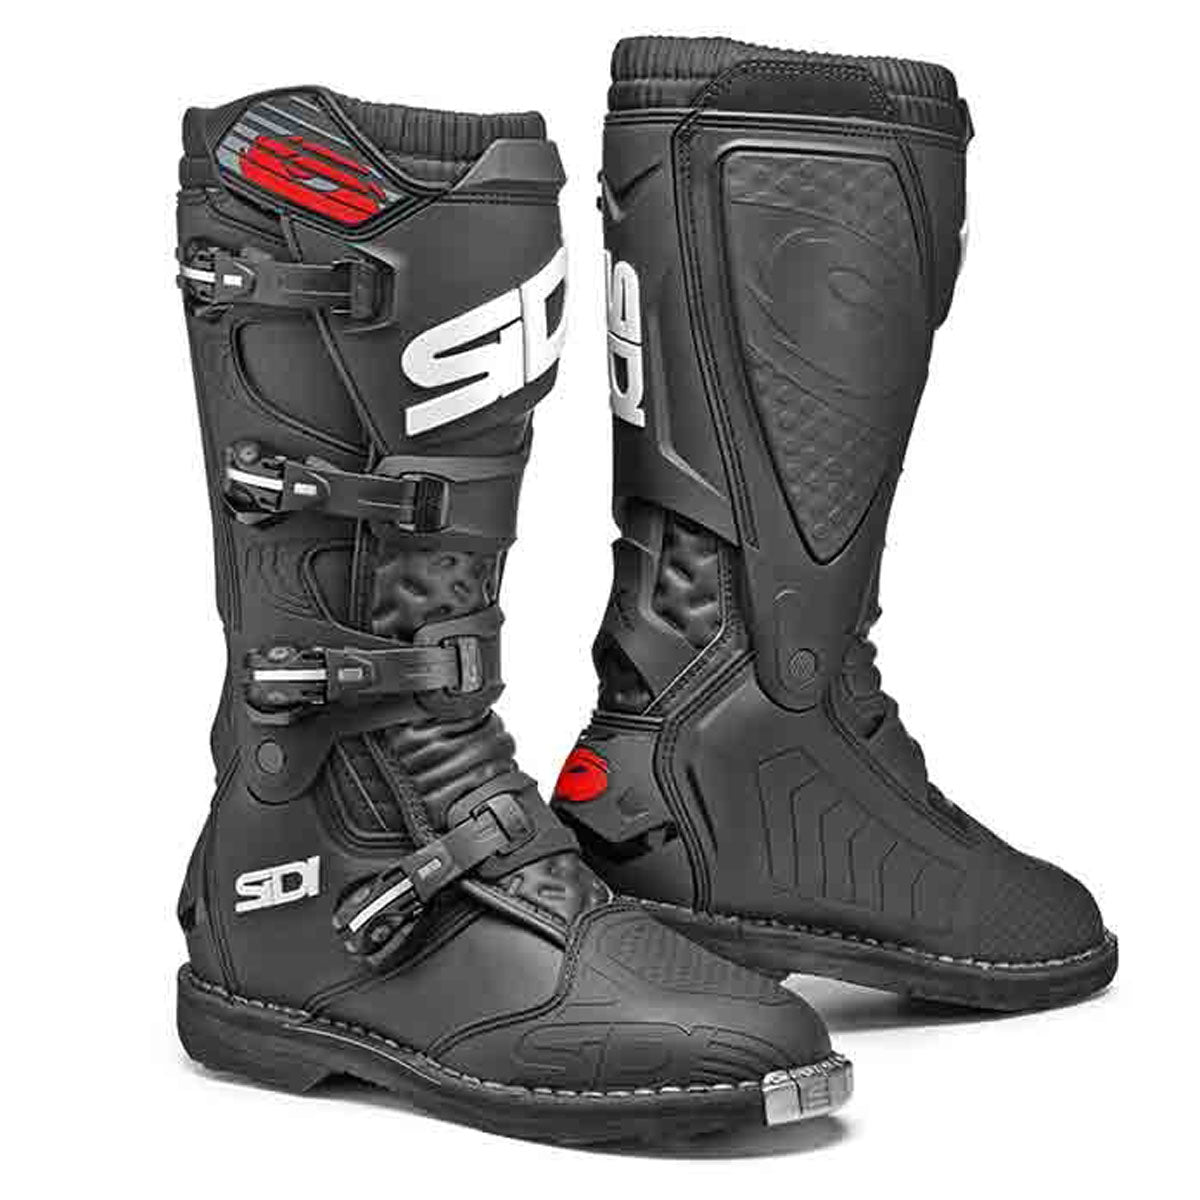 Sidi X-Power Boots - Black